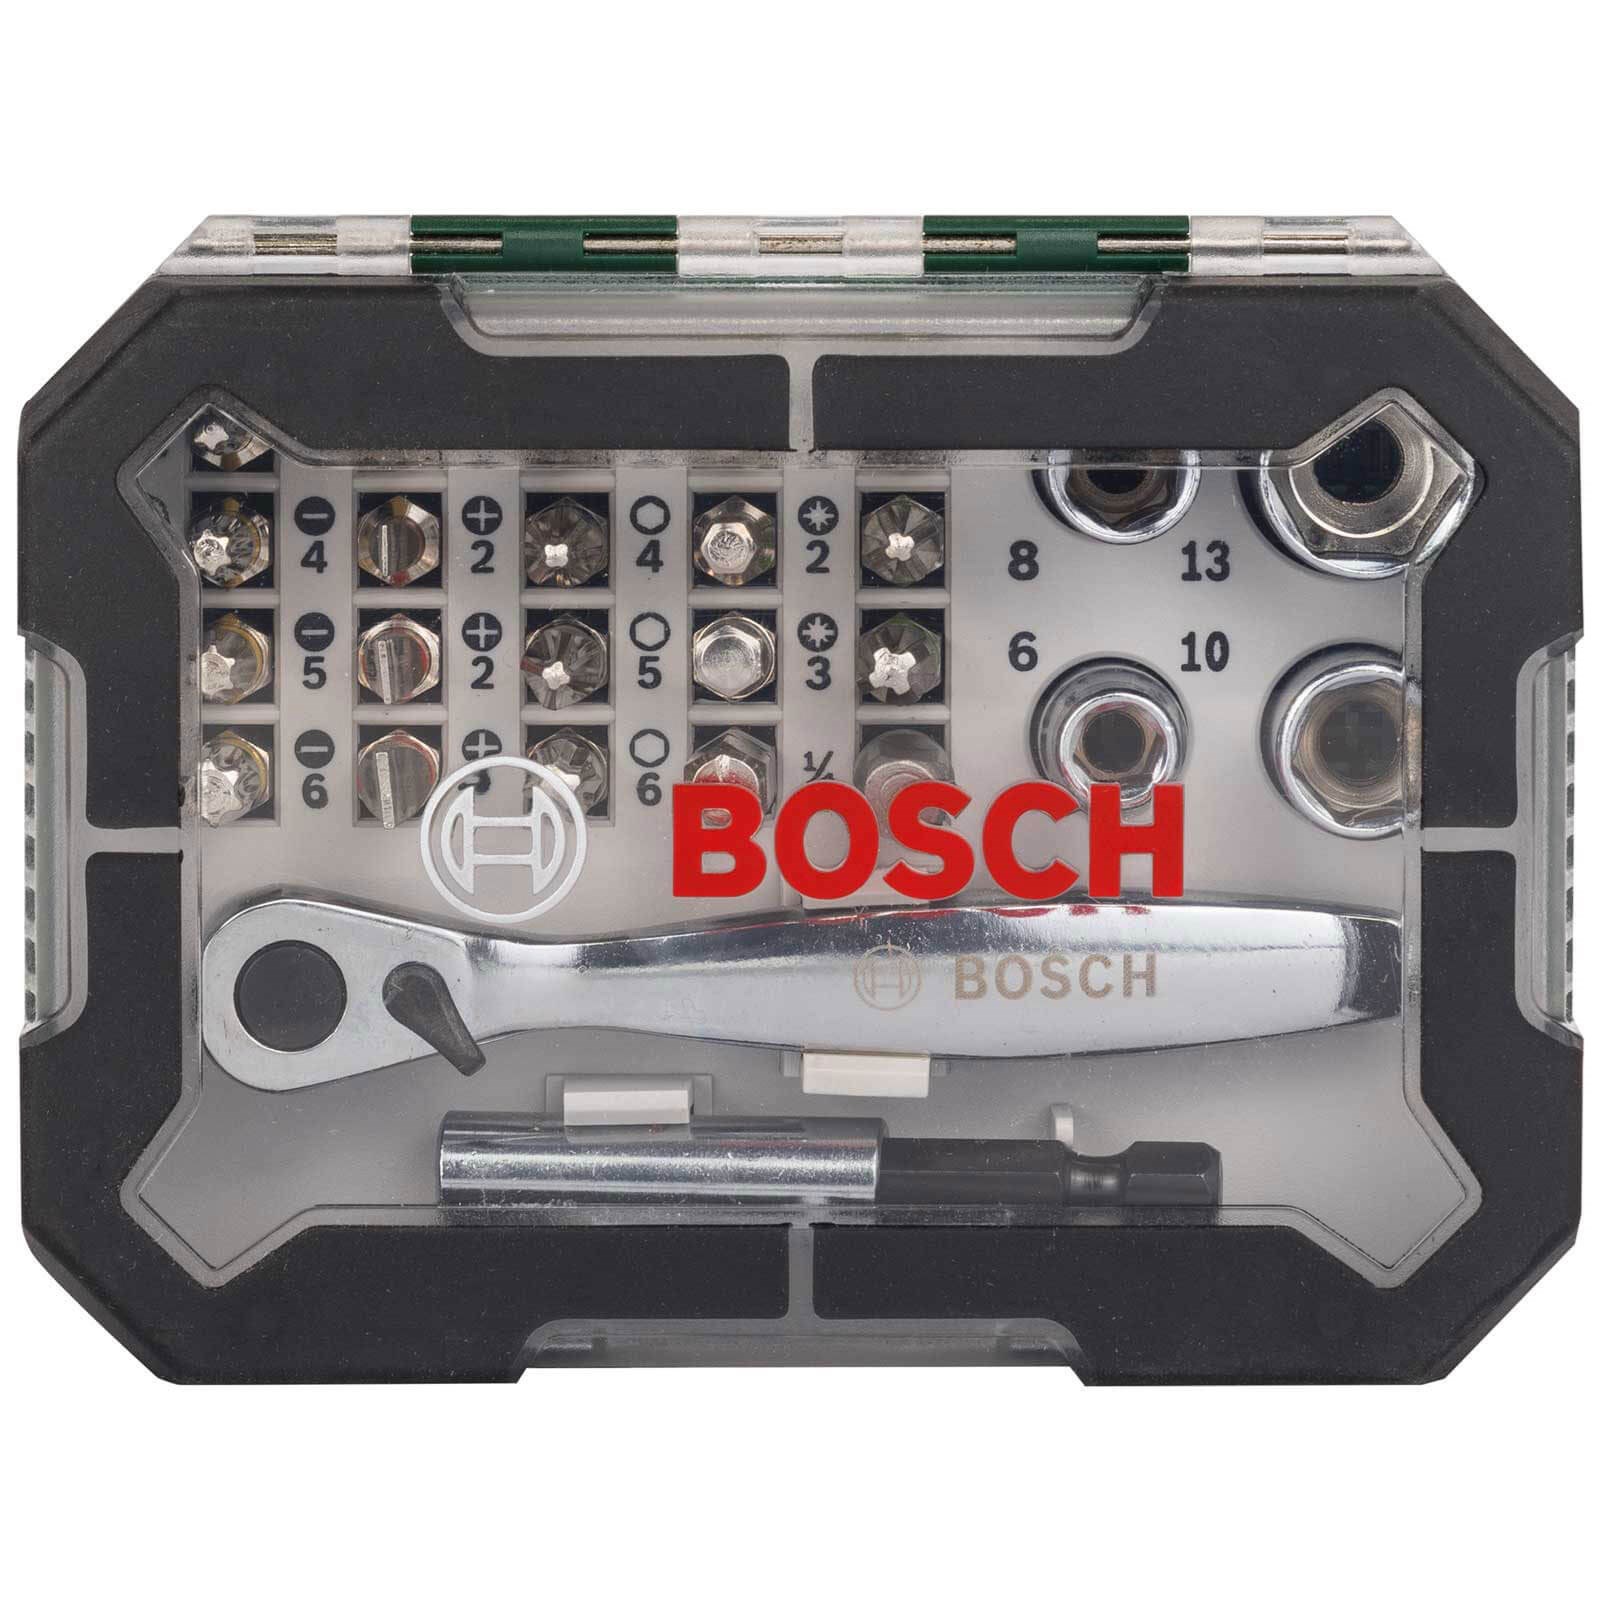 Bosch Screwdriver Bit and Ratchet Set 26 Pieces